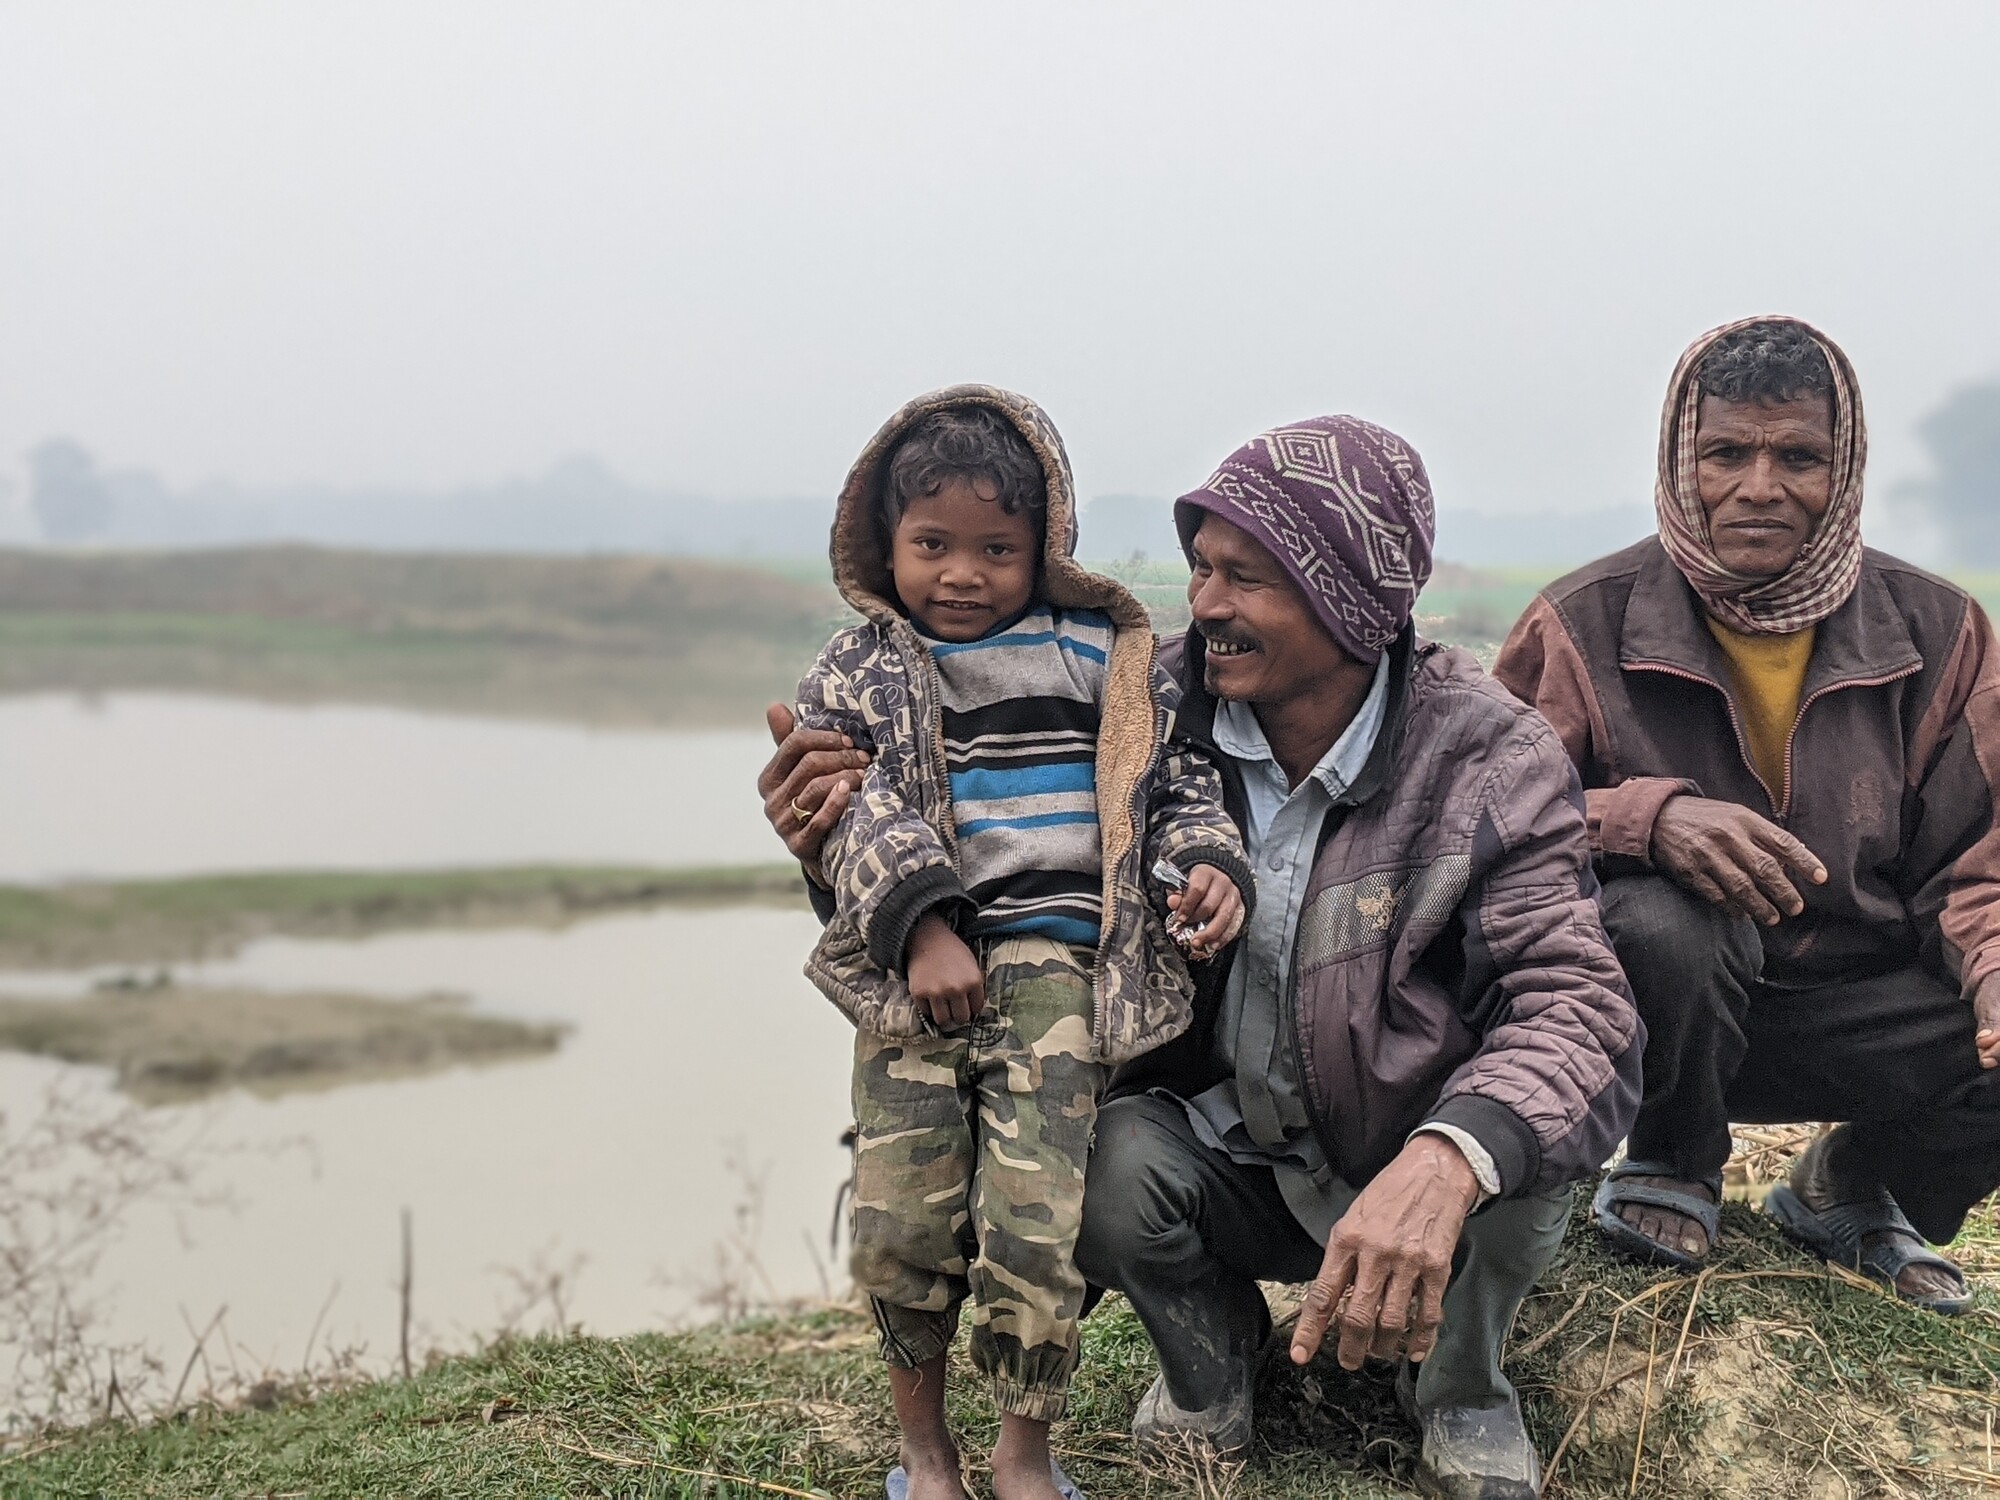 Two Nepali men squat next to a child near fish ponds.